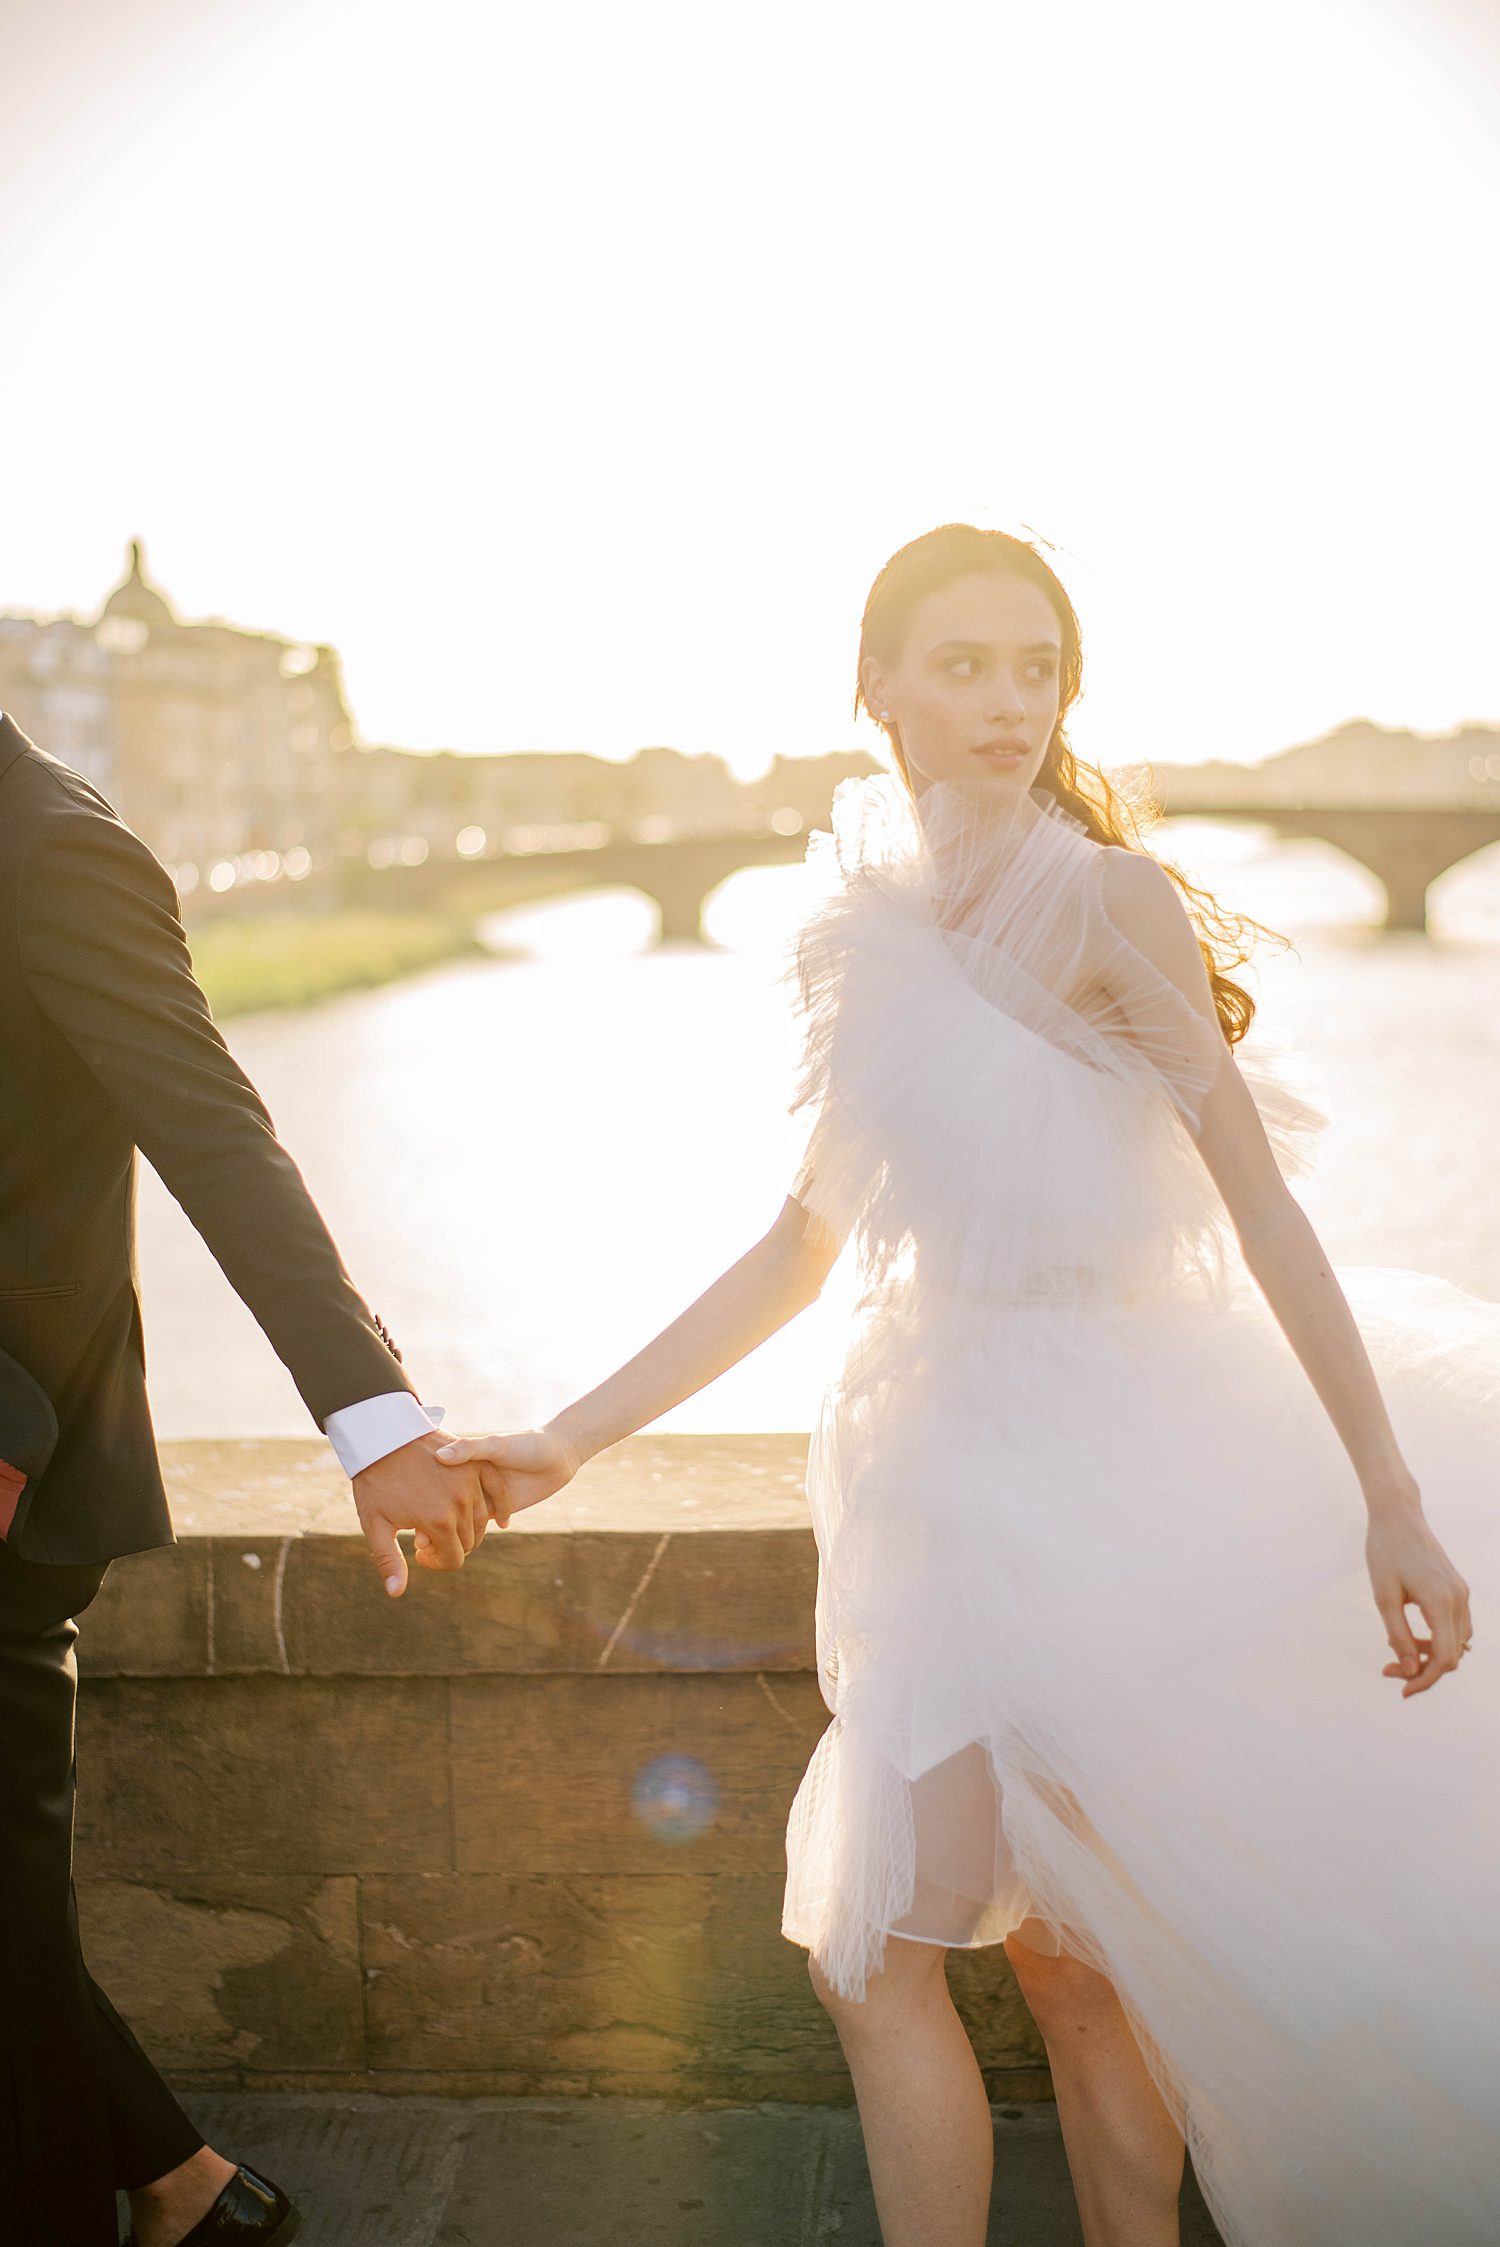 newlyweds hold hands walking over stone bridge at sunset